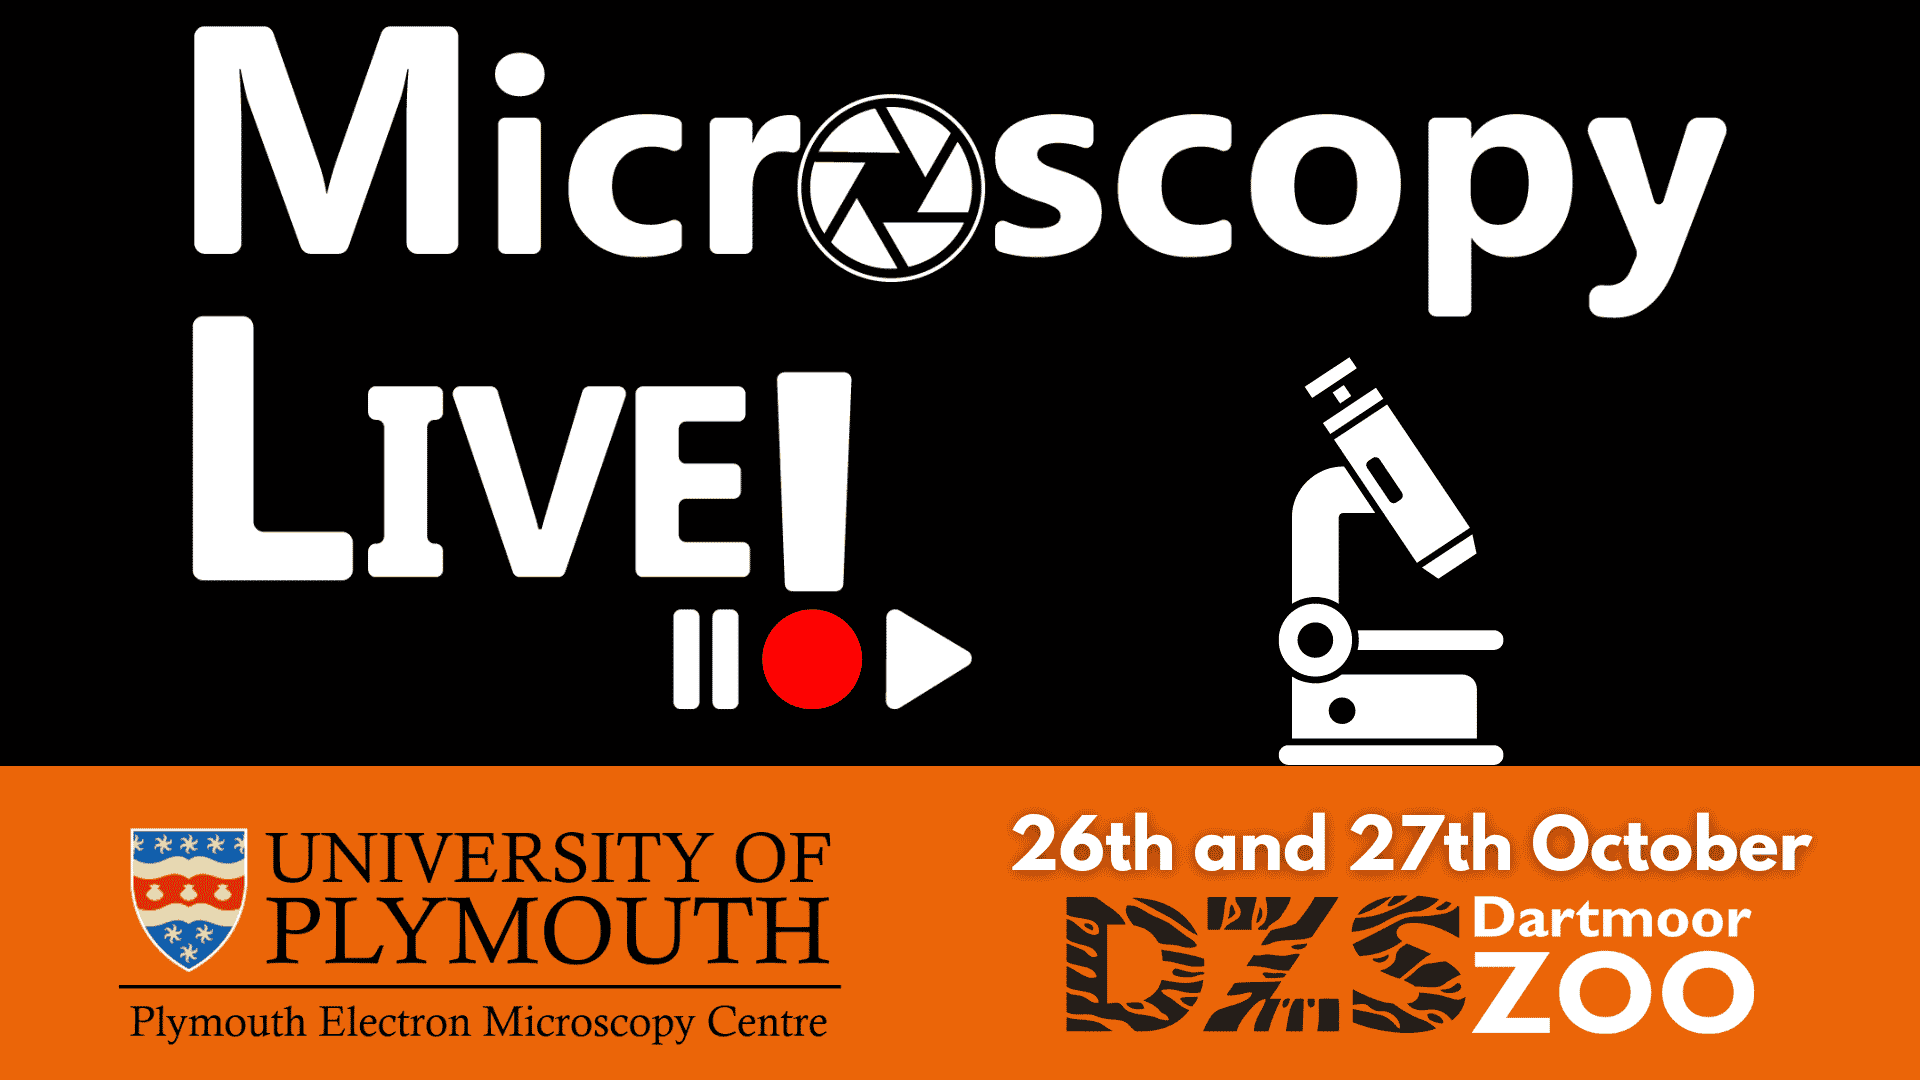 Microscopy live is coming to Dartmoor Zoo!